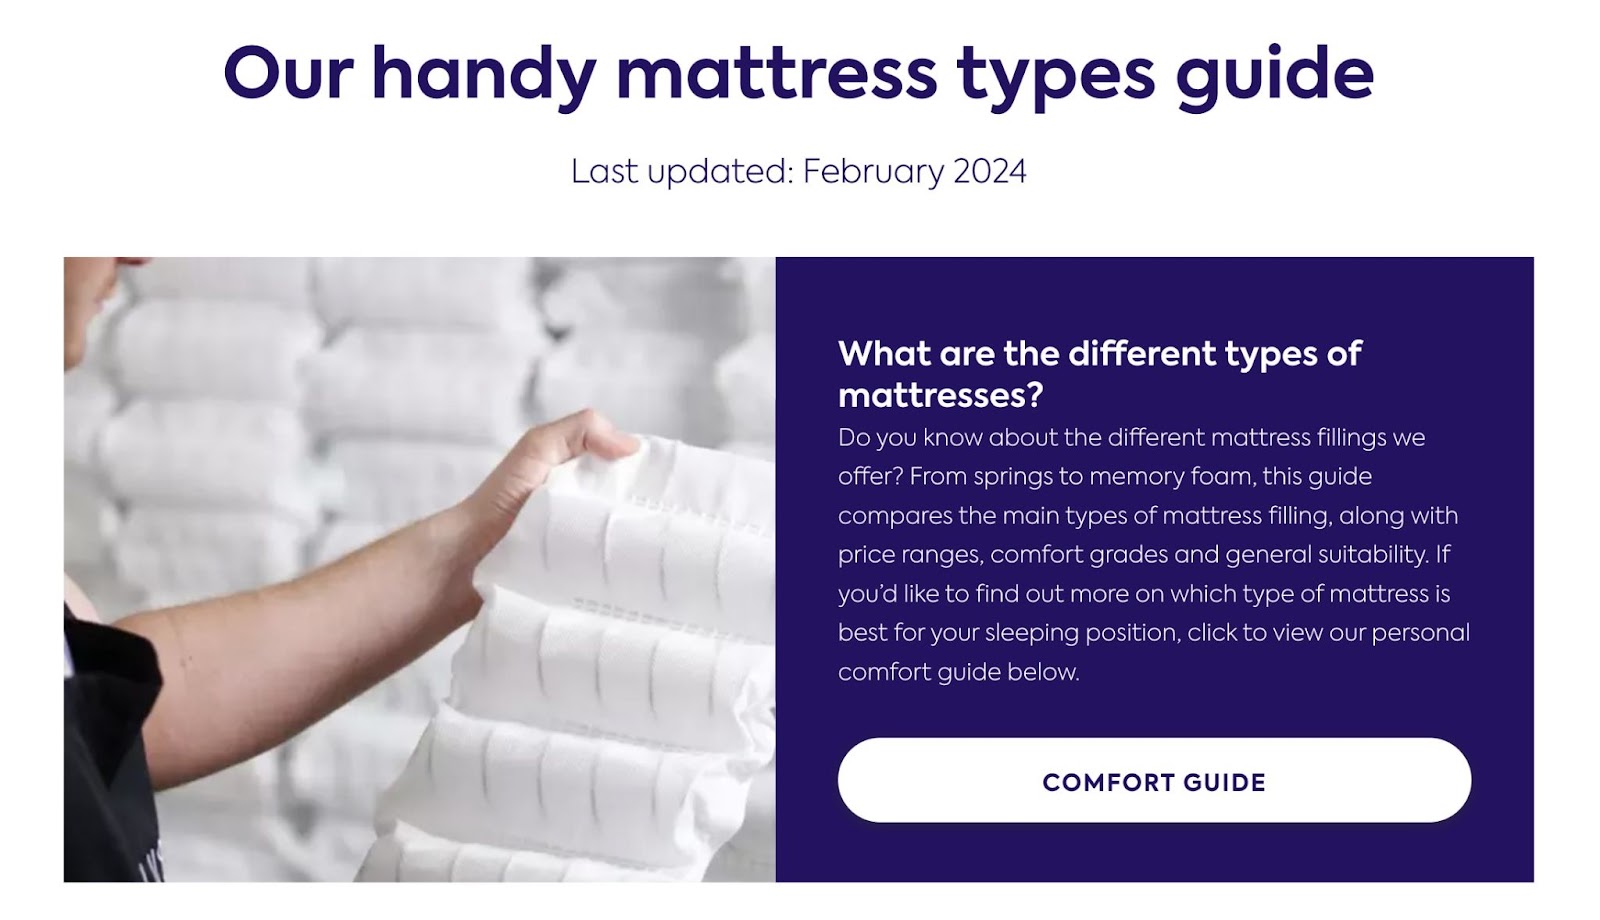 Dreams's mattress types guide